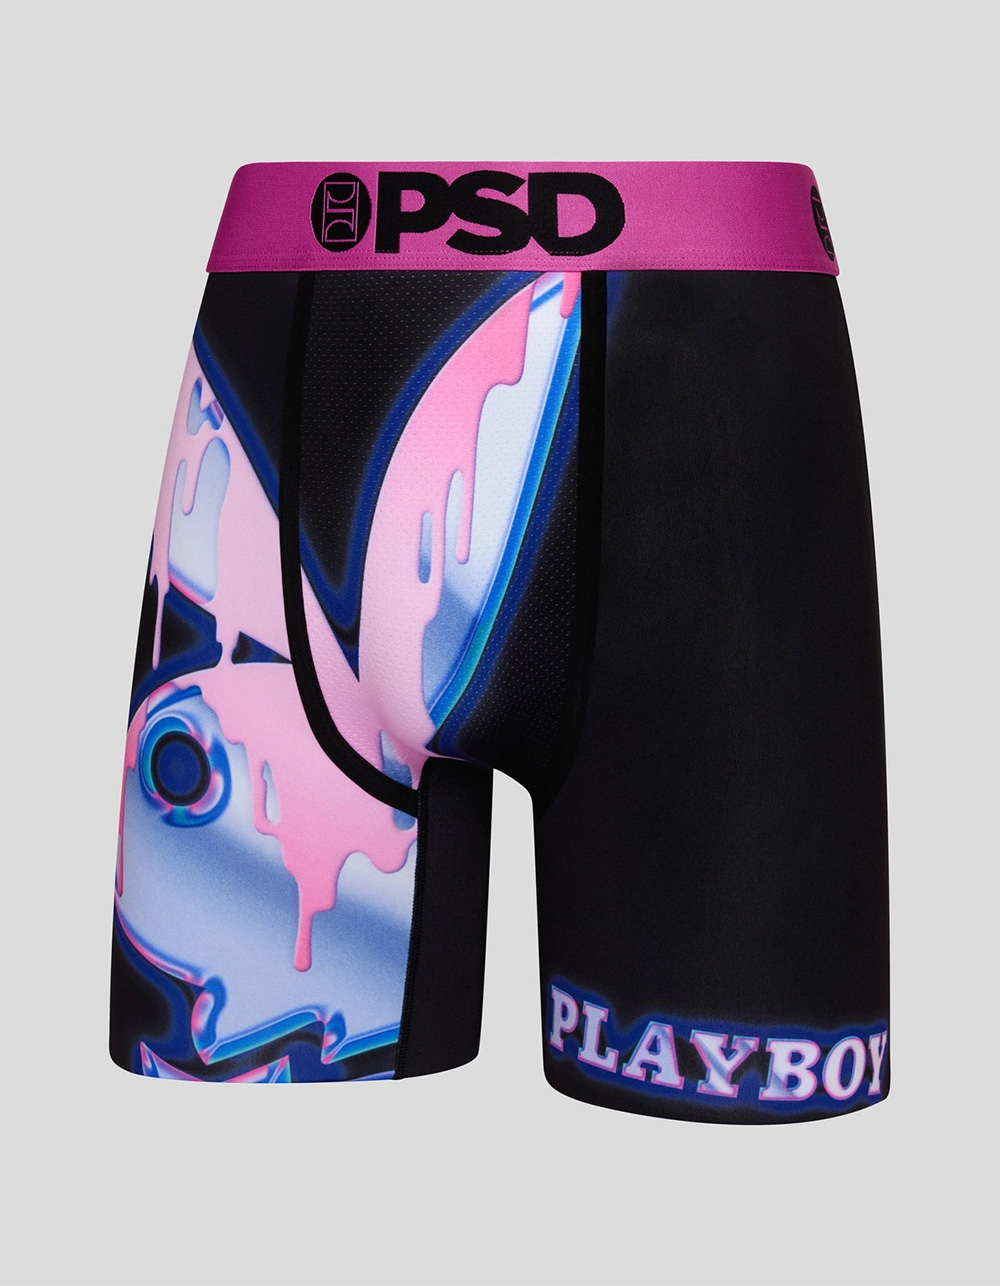 PSD Rubber Ducky Pool Summer Urban Athletic Boxer Briefs Underwear 22011002